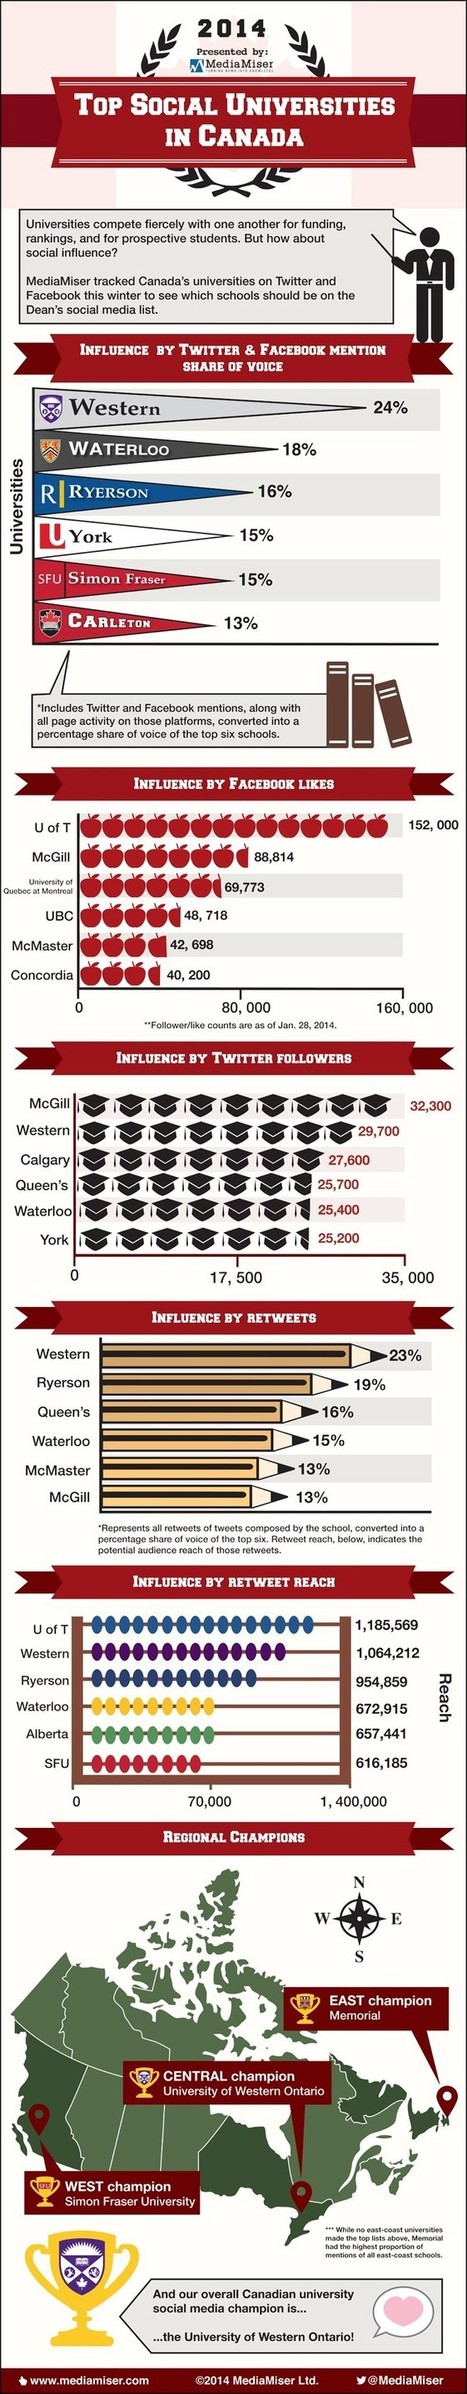 Top 5 Schools & Universities in Canada by Social Media Engagement | The 21st Century | Scoop.it